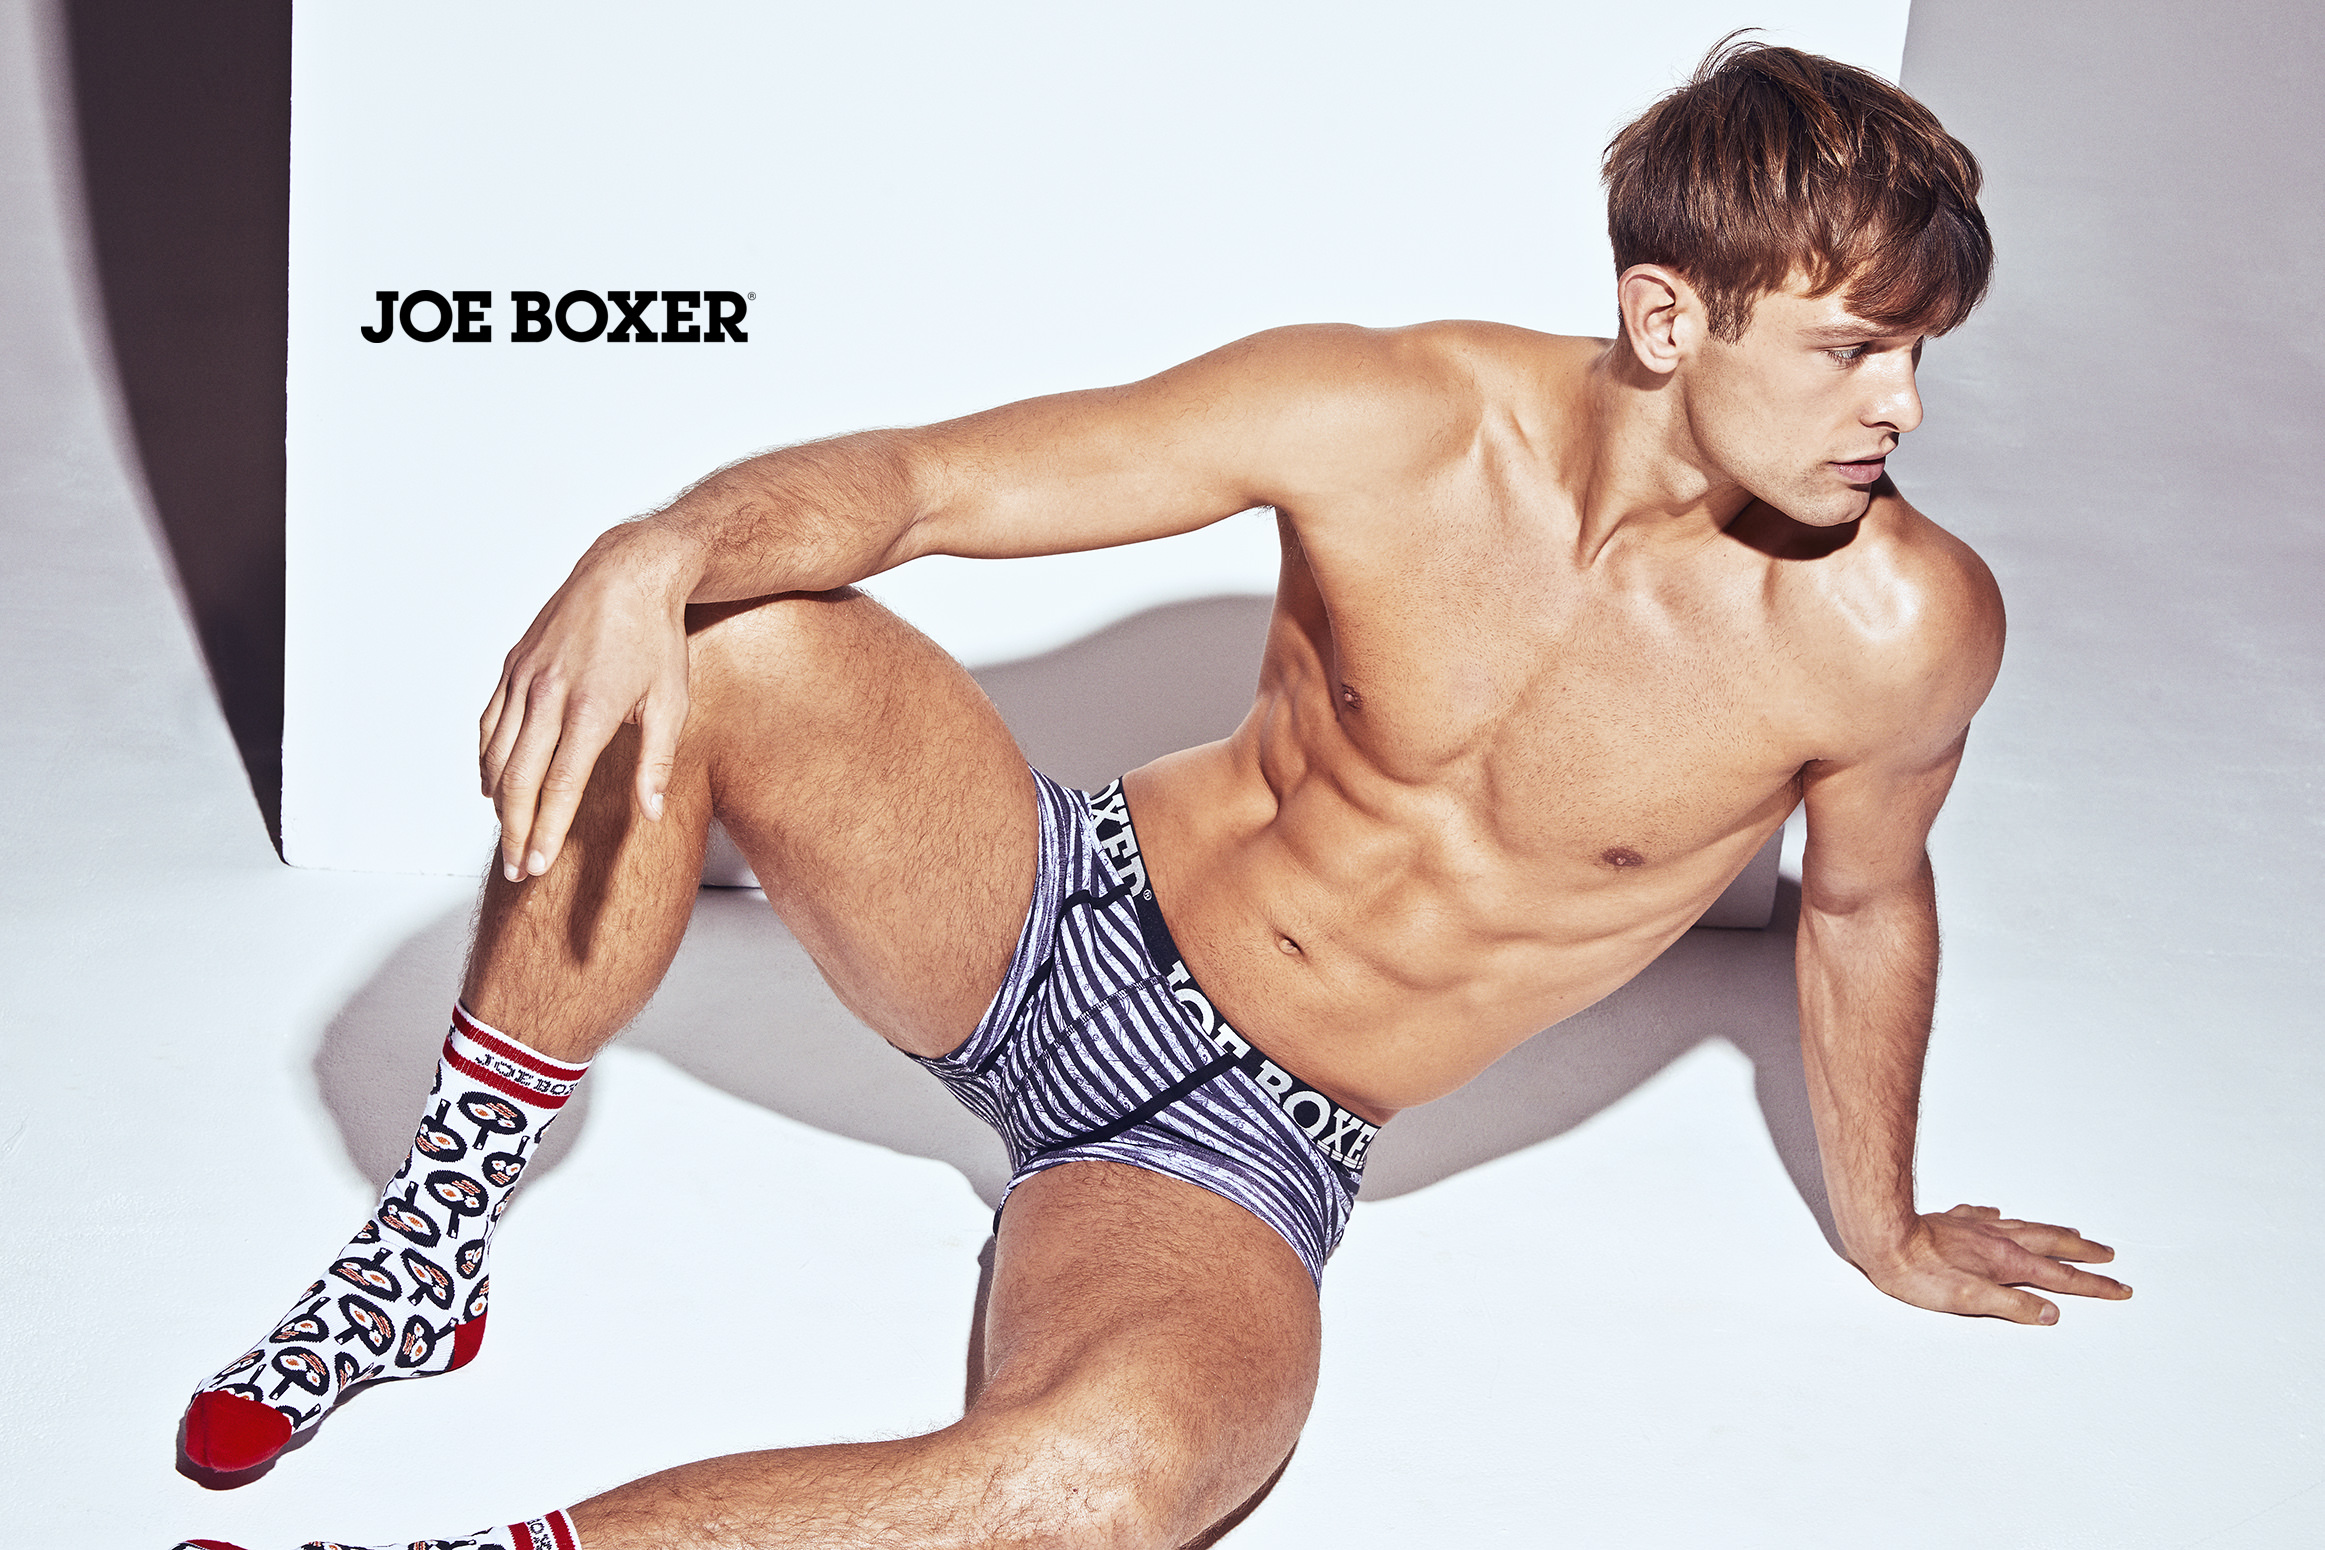 boxers-lingerie-fun-joe-boxer-london-studio-underwear-mens-181211_JB13189 f1